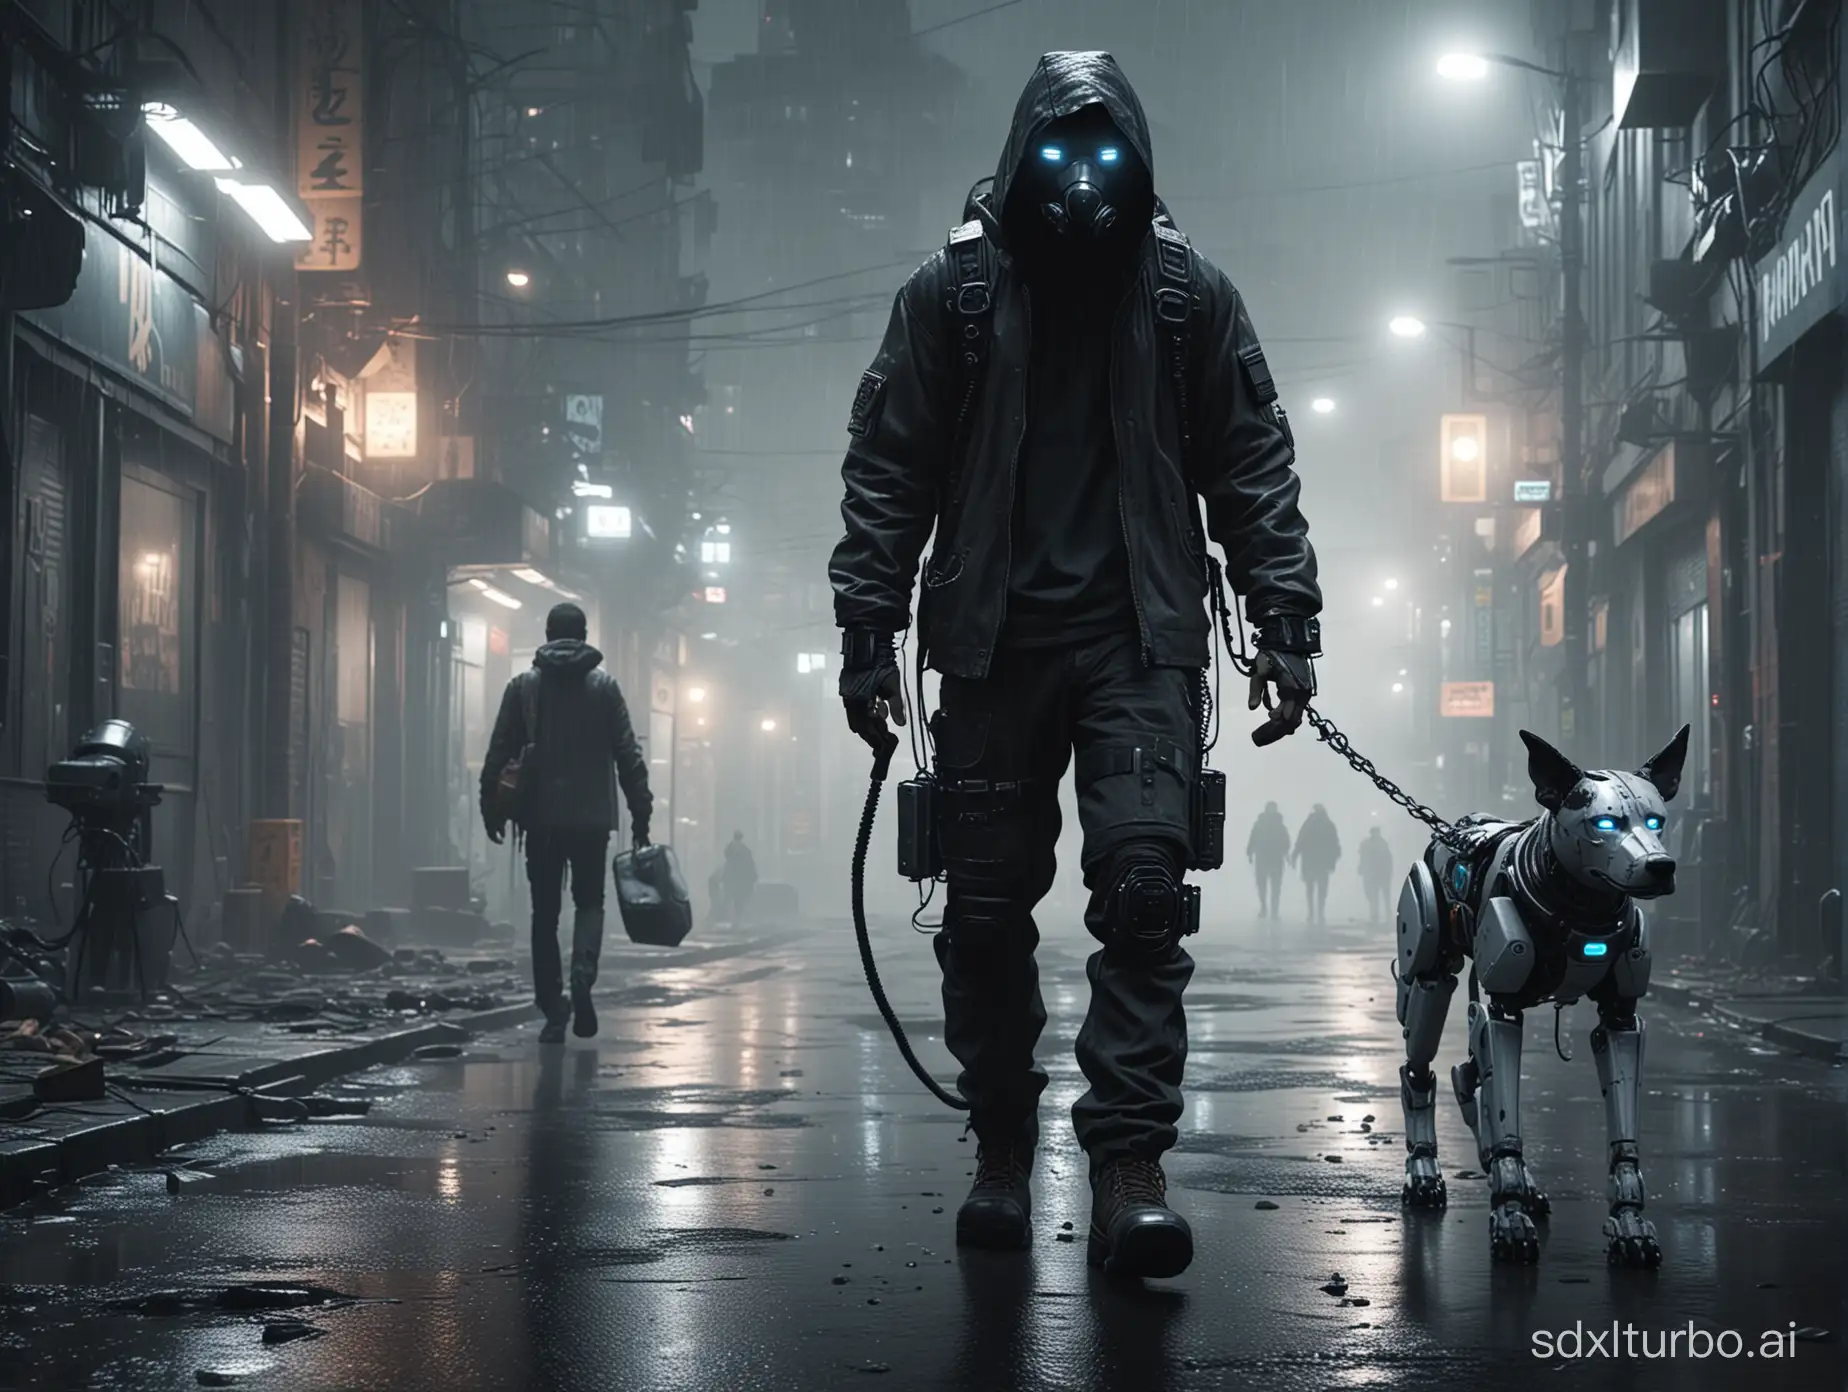 Dystopian-Cyberpunk-Scene-Man-Walking-with-Robot-Dog-in-Dark-Rainy-City